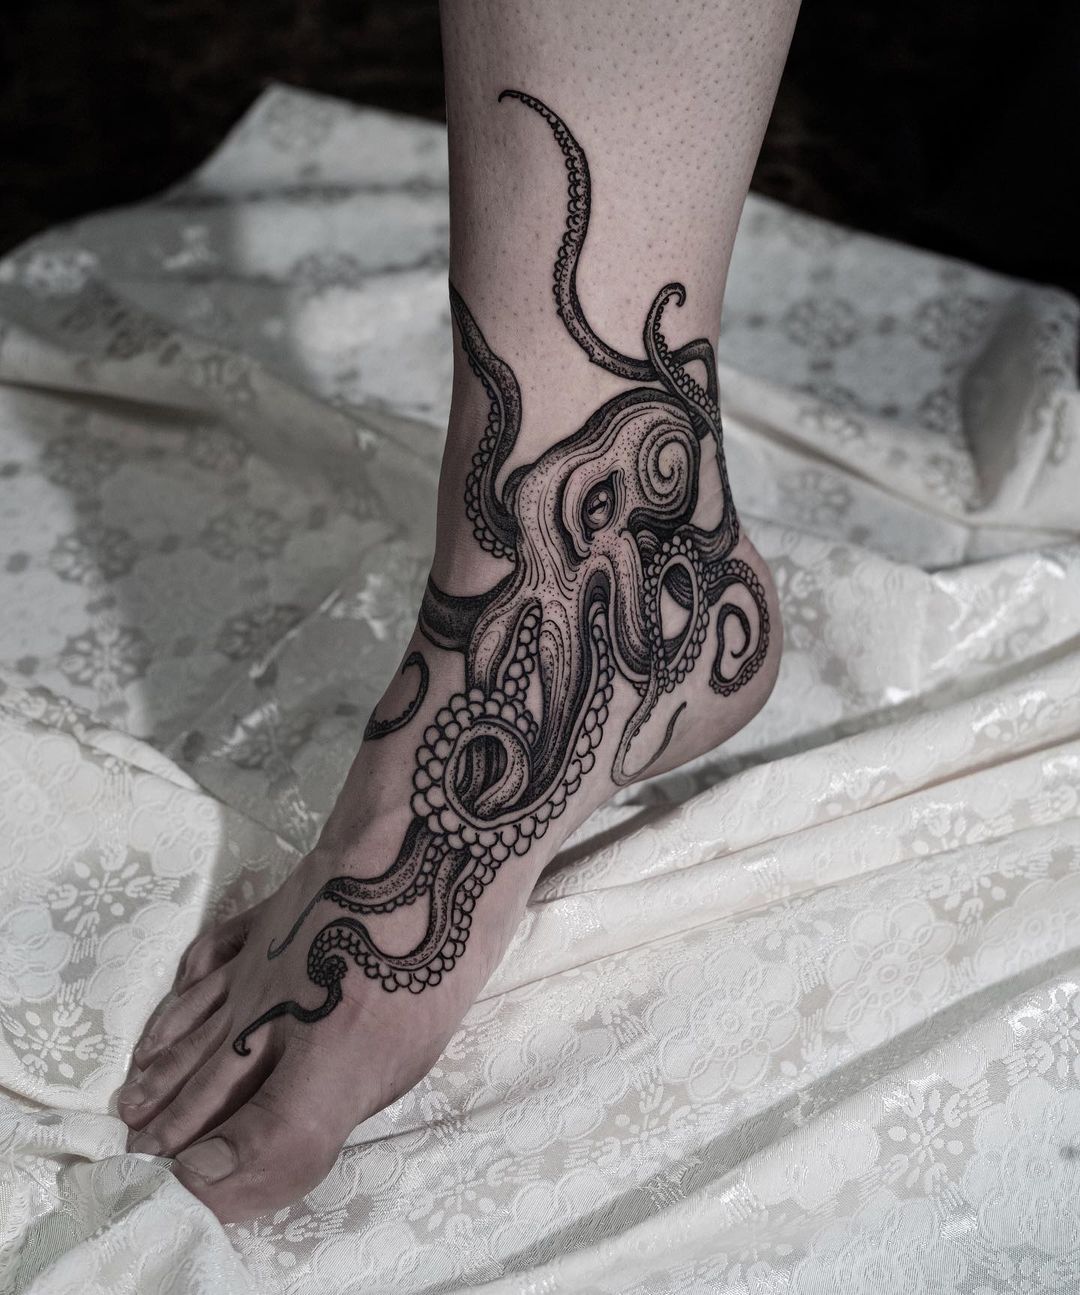 Blue Ringed Octopus Temporary Tattoo Sticker - OhMyTat